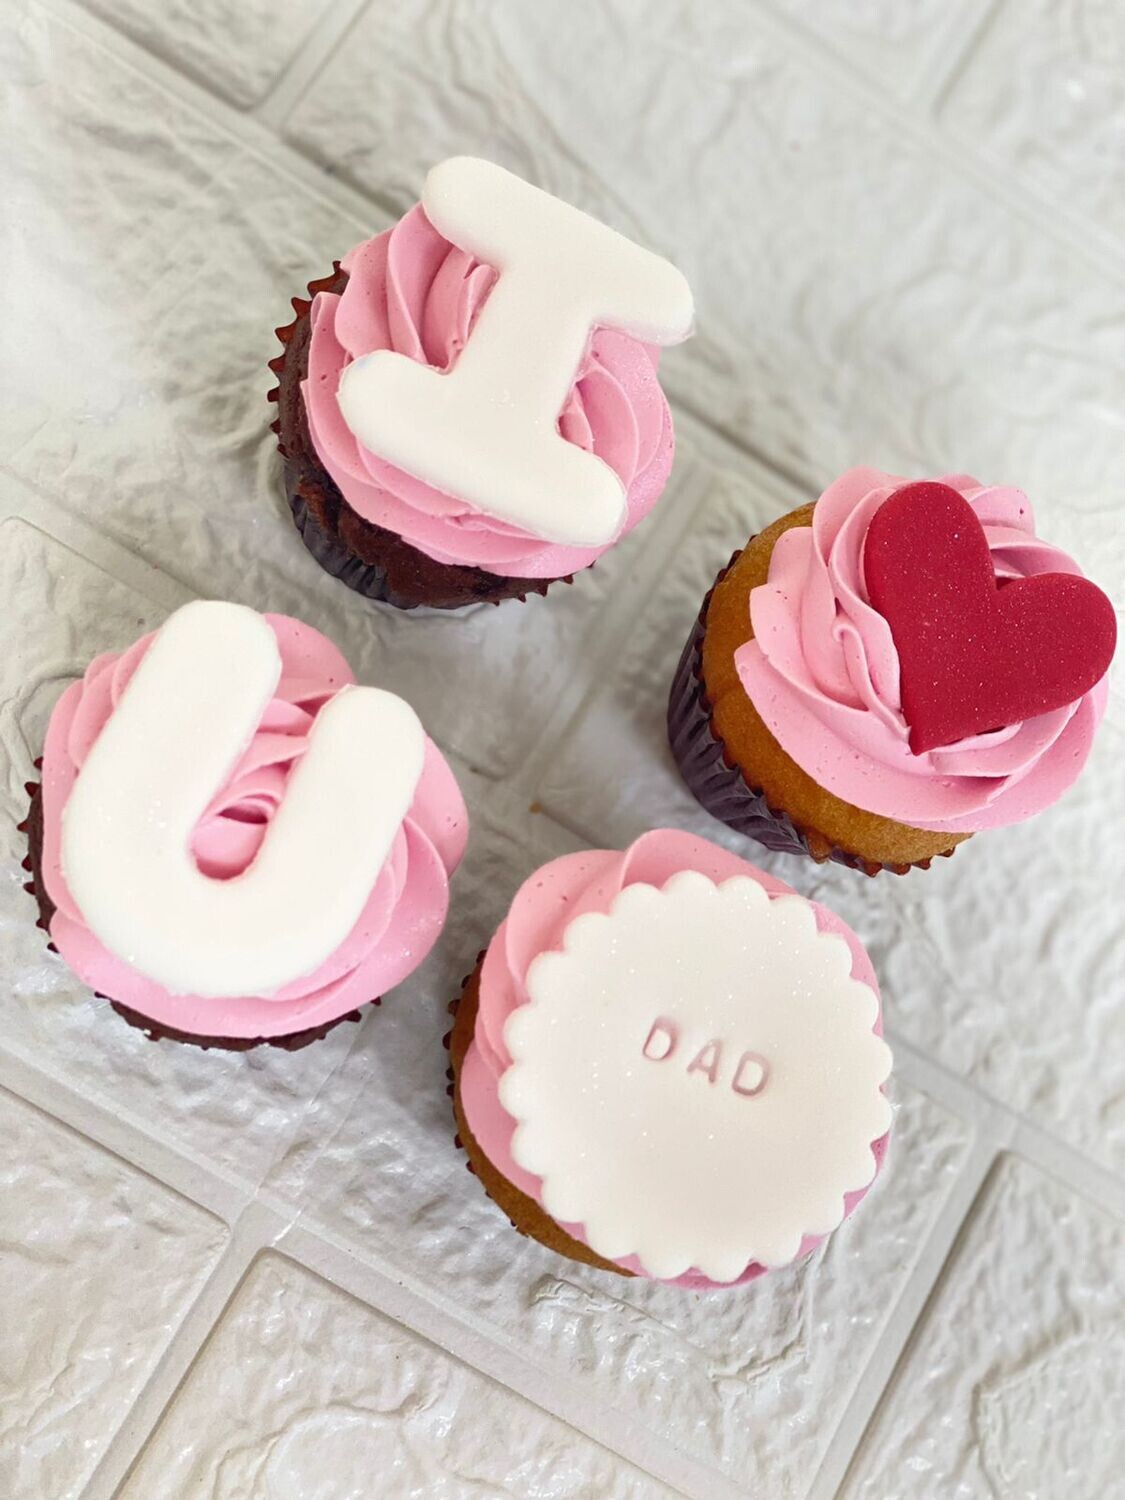 I ❤️ U DAD Cupcakes Set